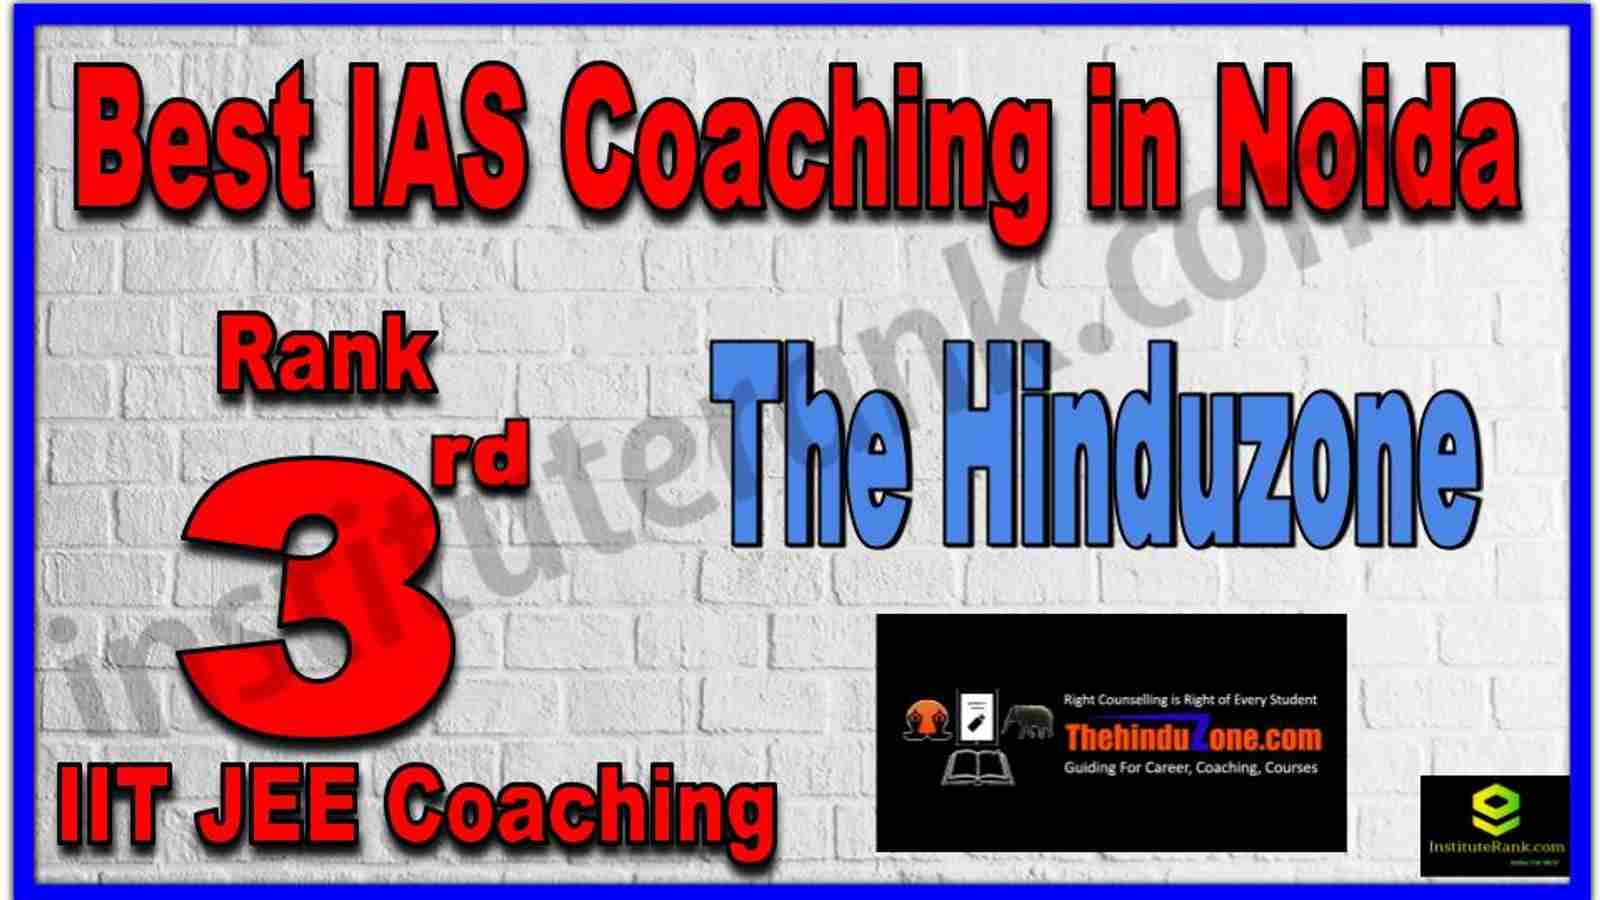 Rank 3rd Best IAS Coaching in Noida